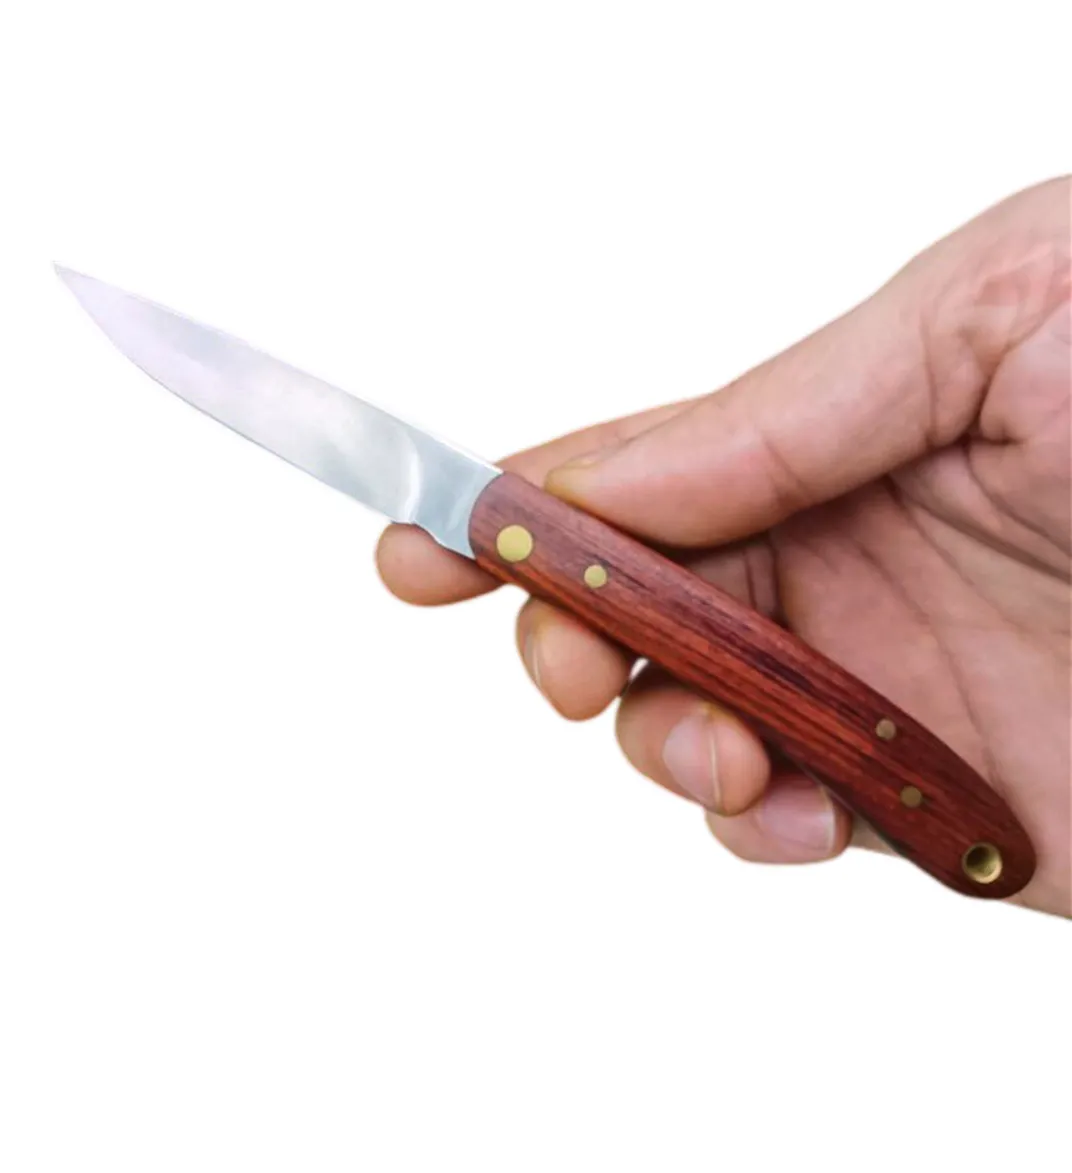 Top Qualität H2373 Klappklinge Obstmesser 420C Satin Klinge Holzgriff Outdoor Camping Wandern EDC Taschenordner Messer